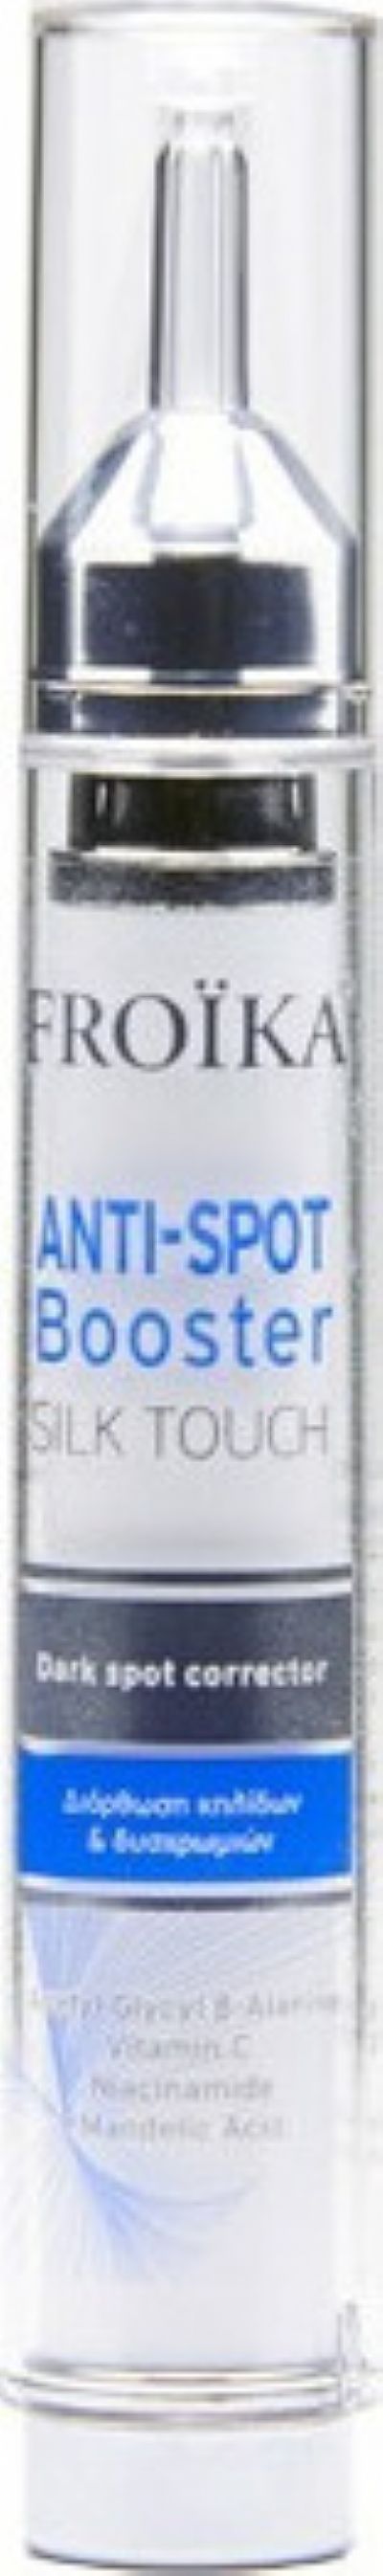 Froika Anti Spot Booster 16ml